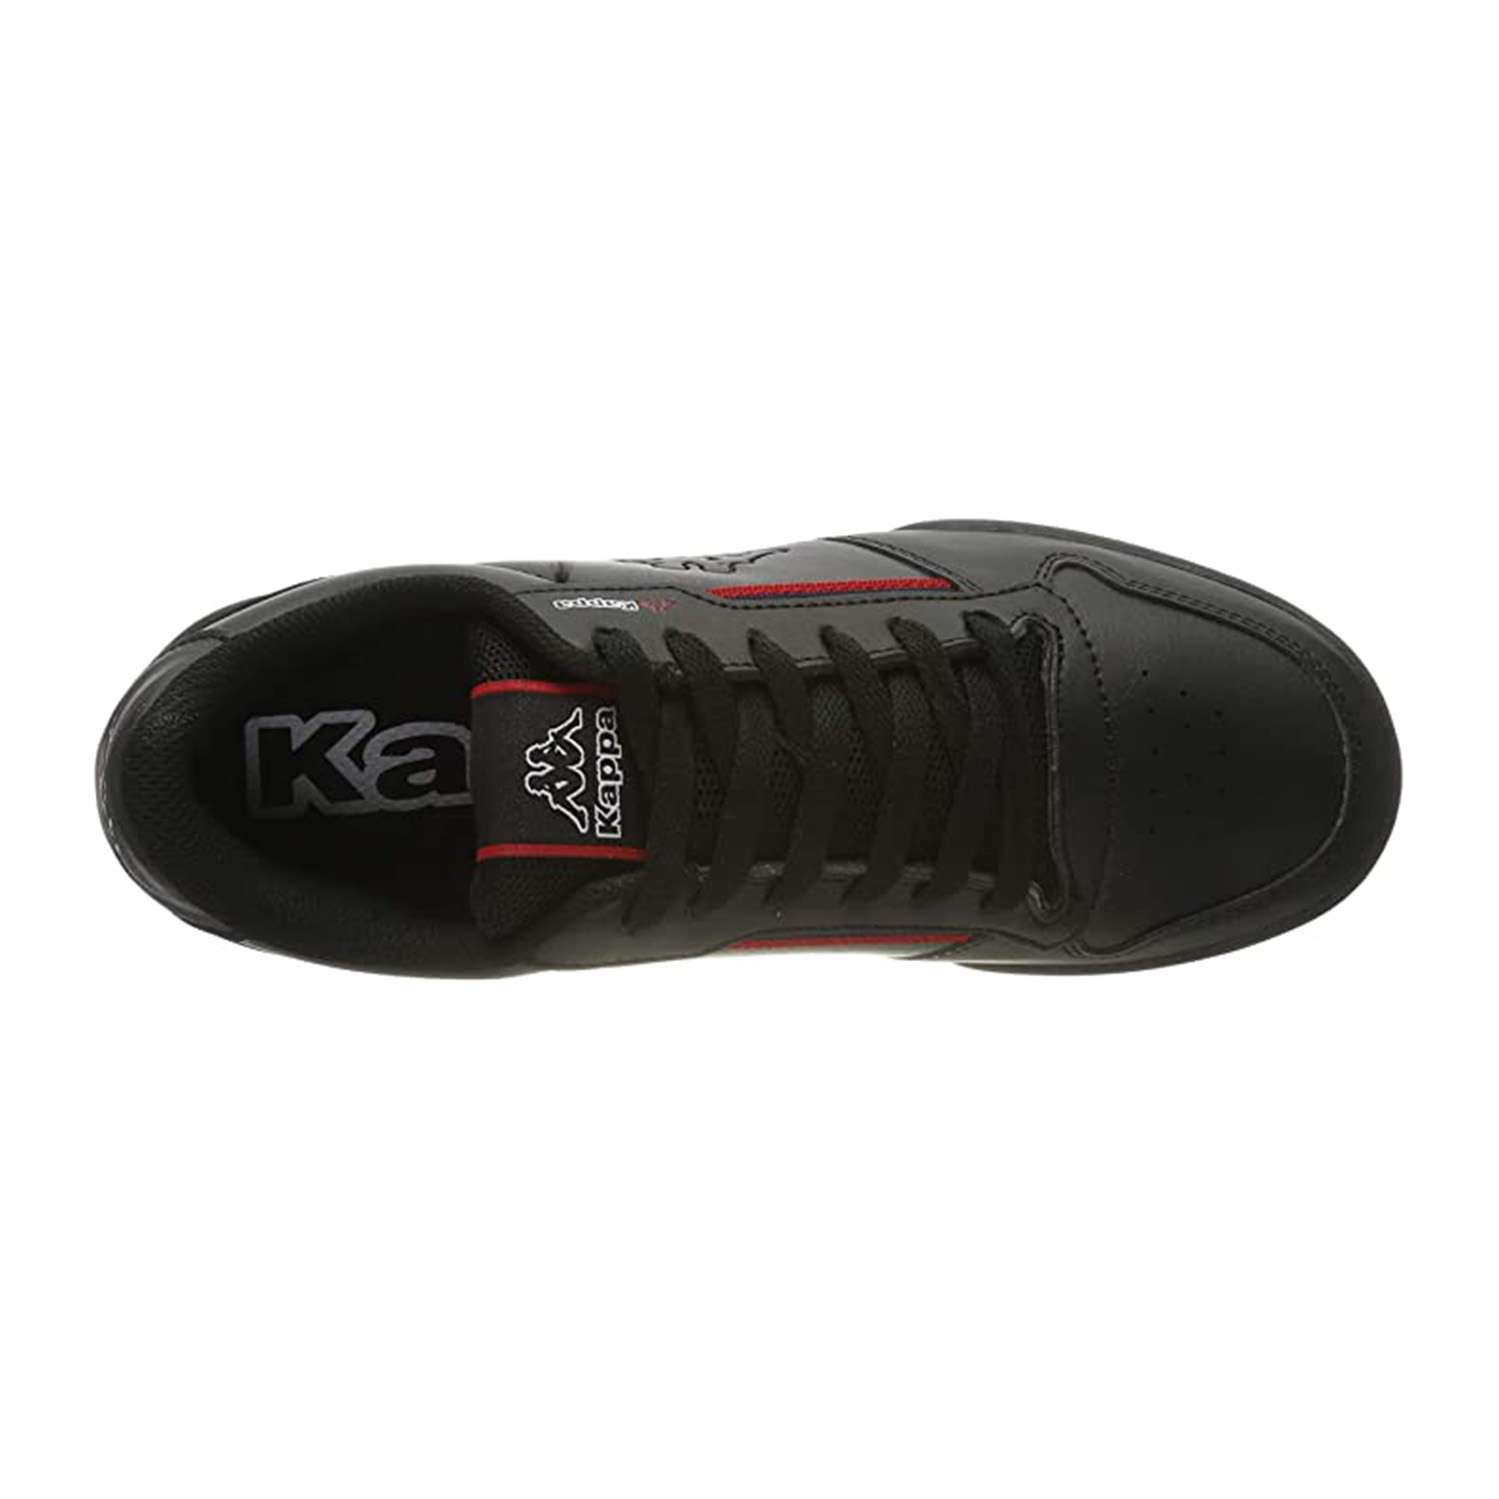 Kappa Sneaker Unisex Turnschuh 242765 schwarz 